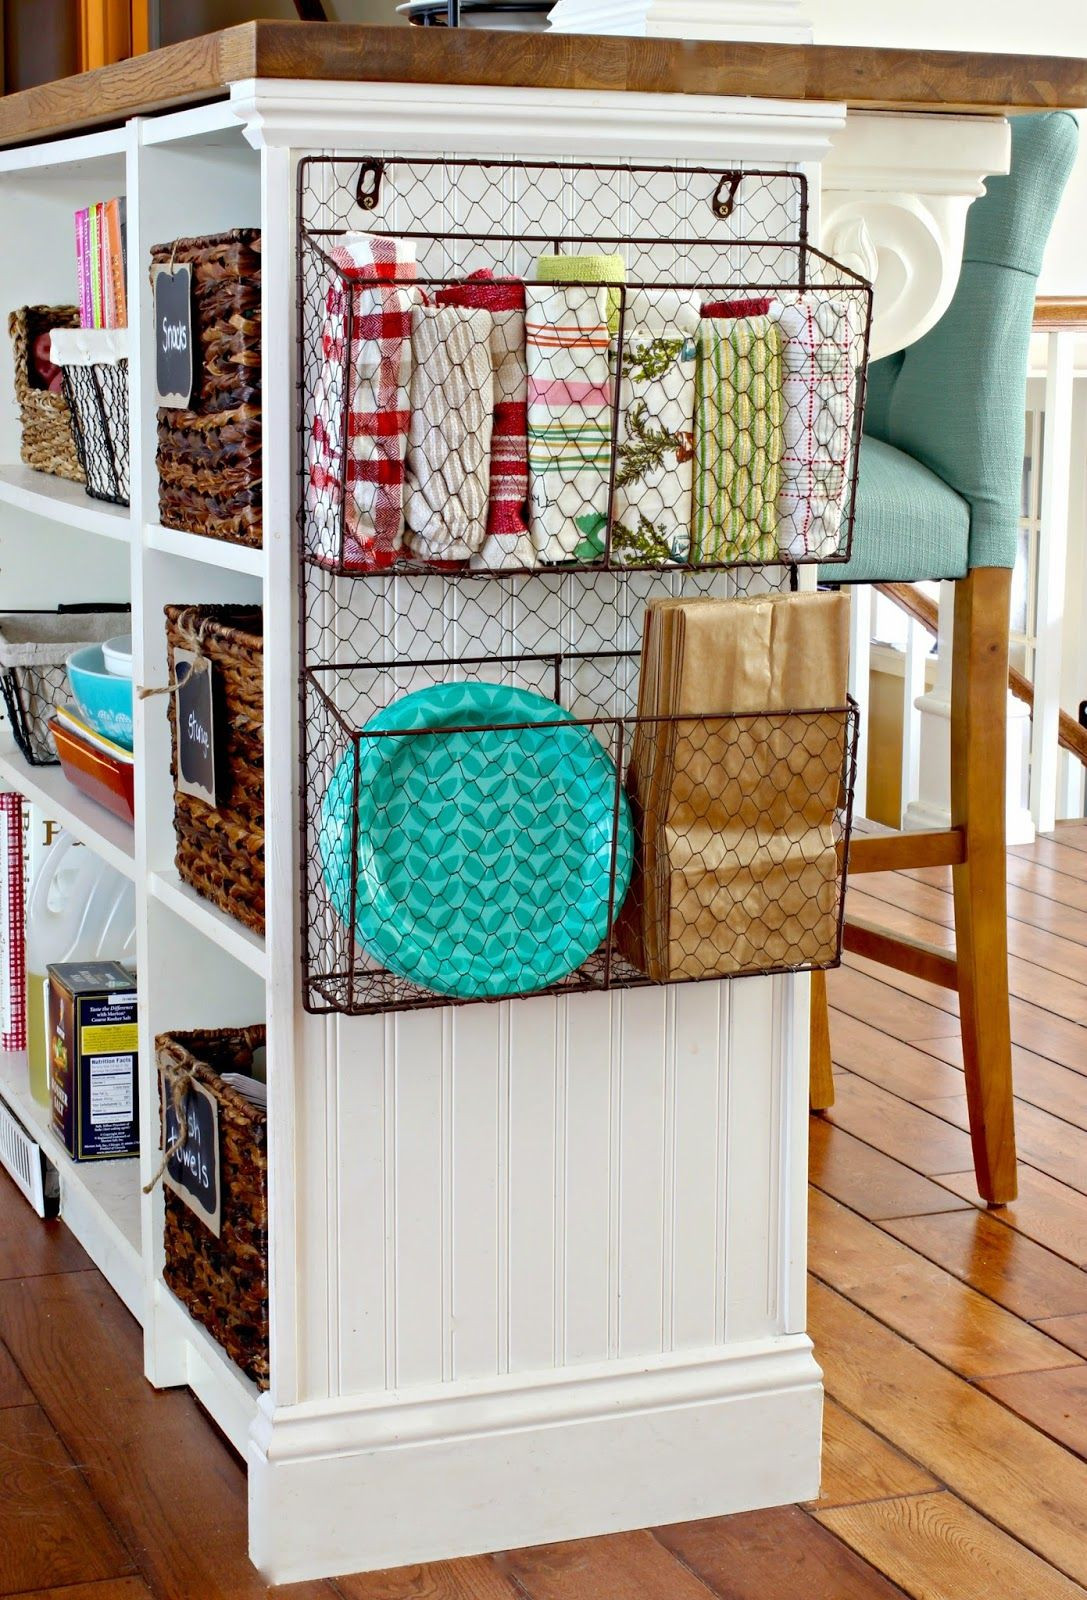 Best ideas about DIY Storage Basket
. Save or Pin DIY Kitchen Decor on Pinterest Now.